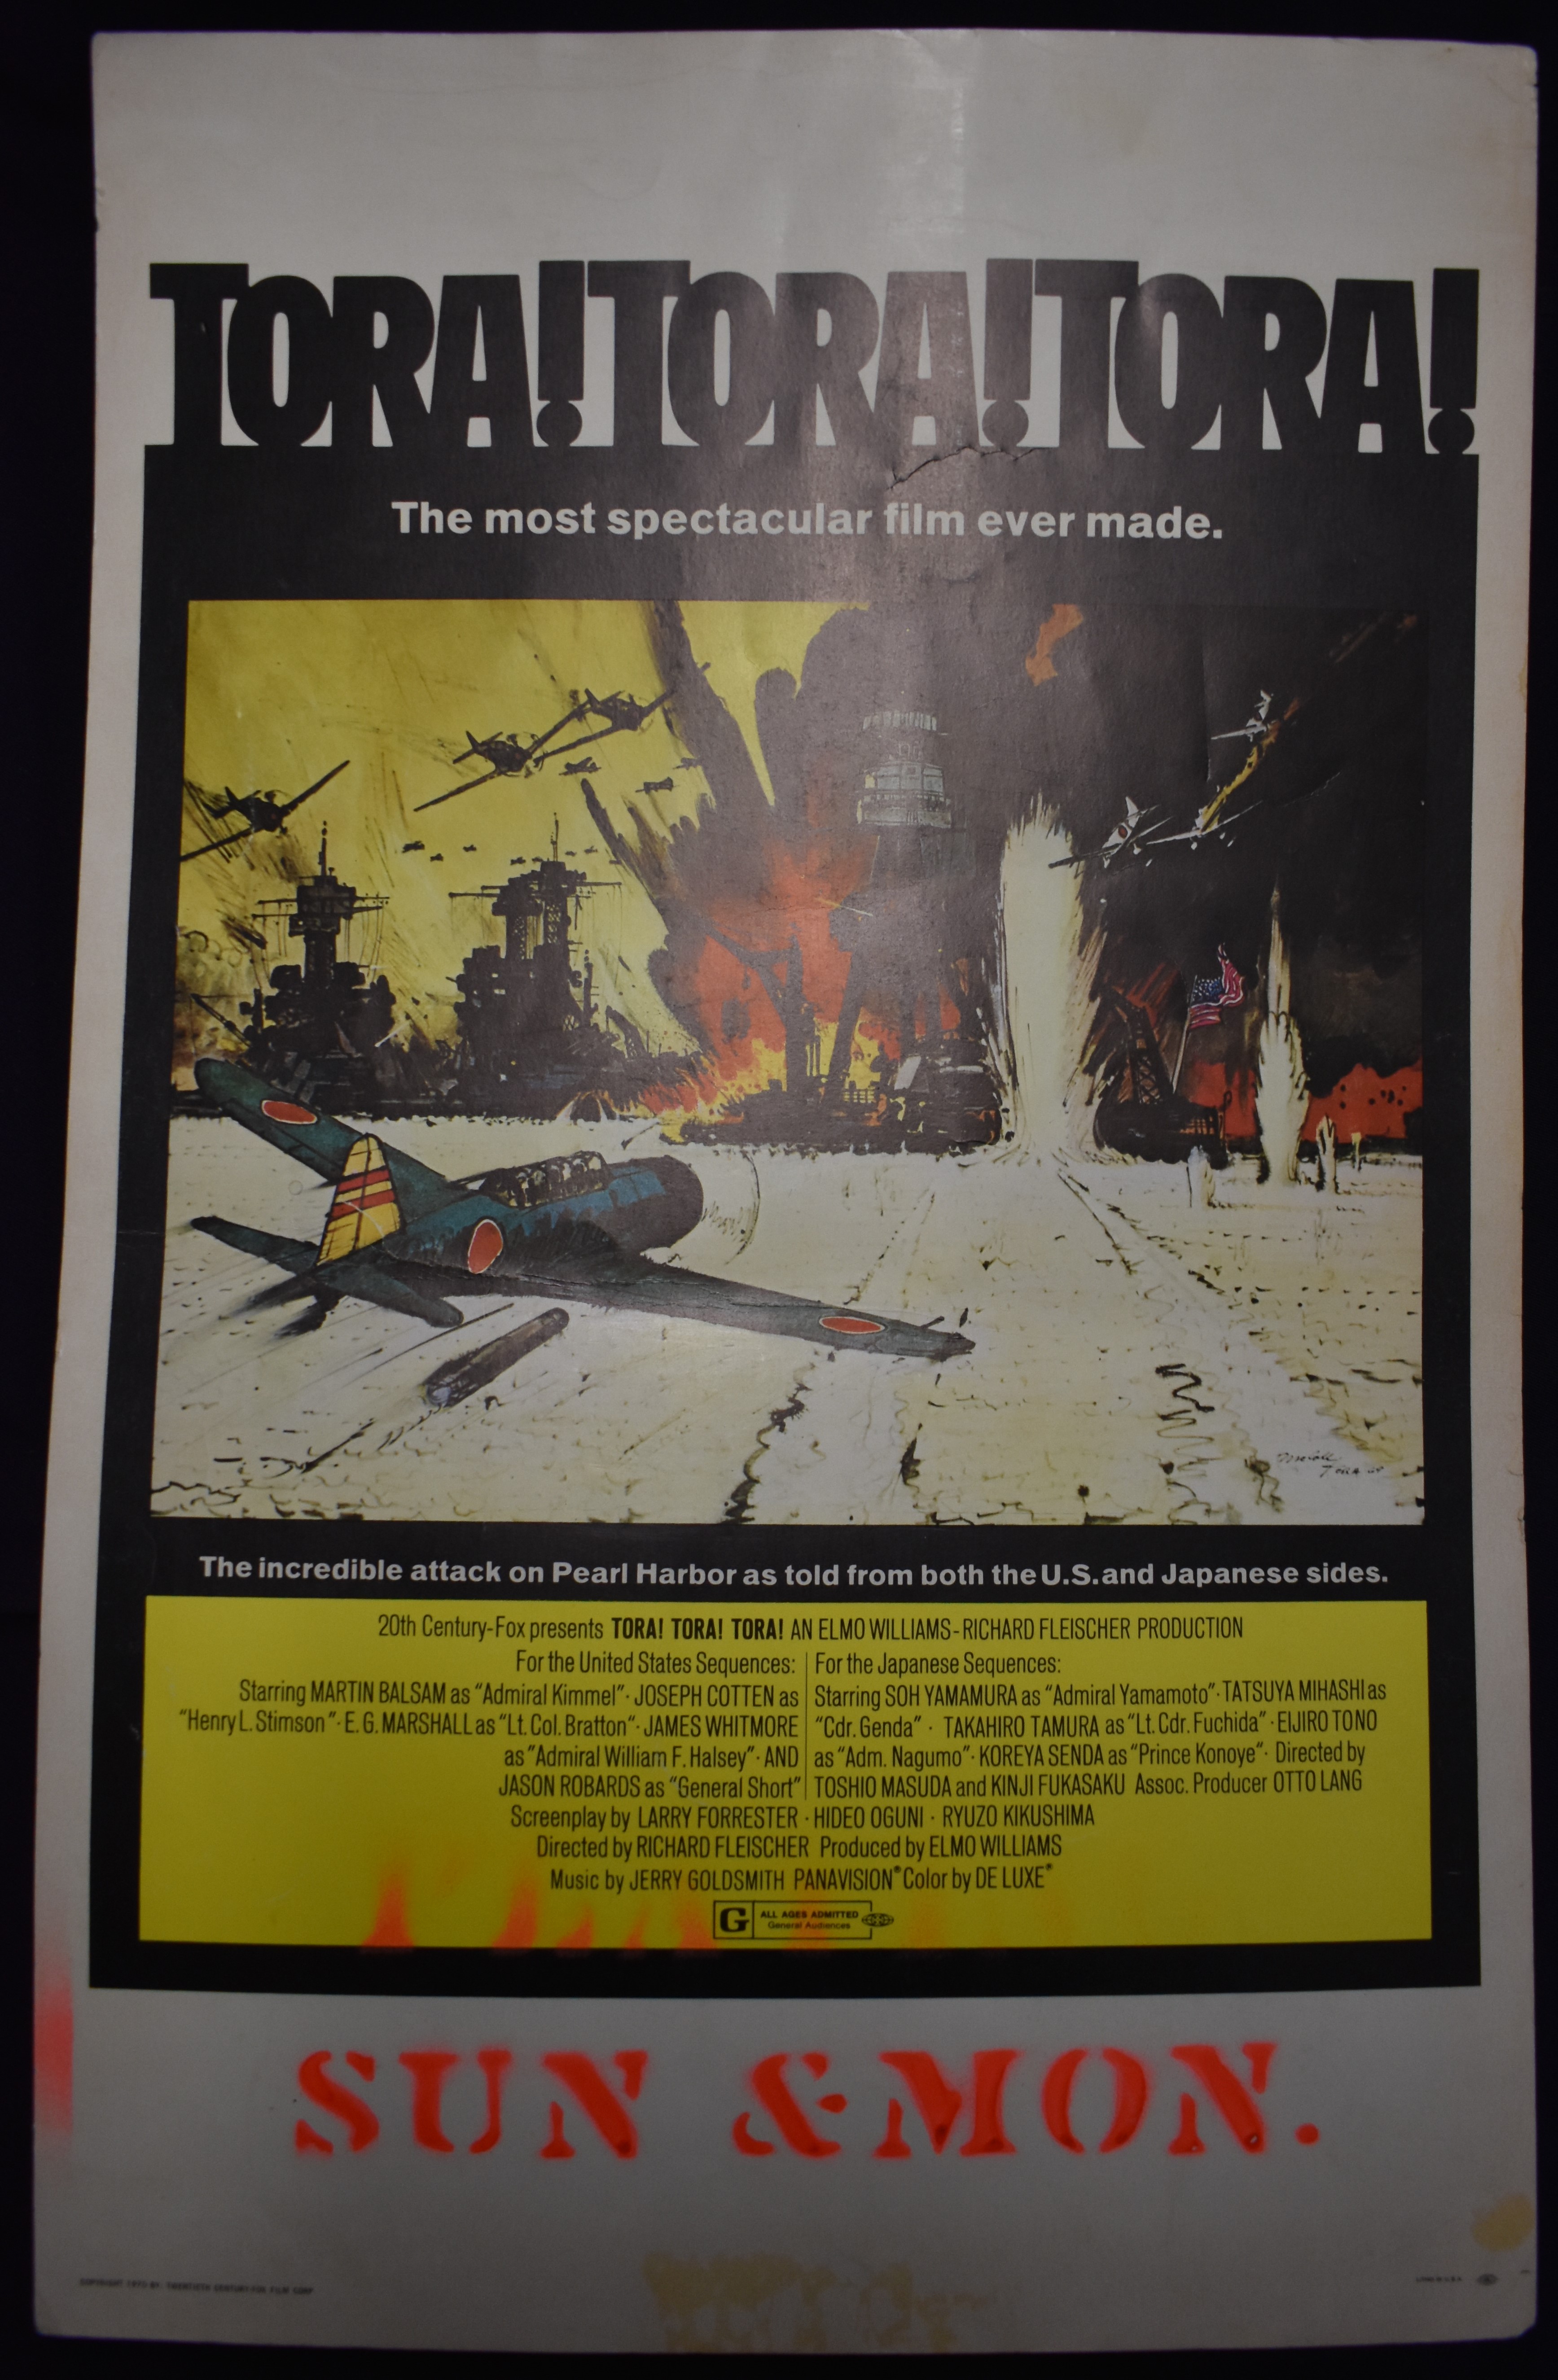 Tora Tora Tora - Vintage Twentieth Century Fox Film Poster, a spectacular film of the incredible